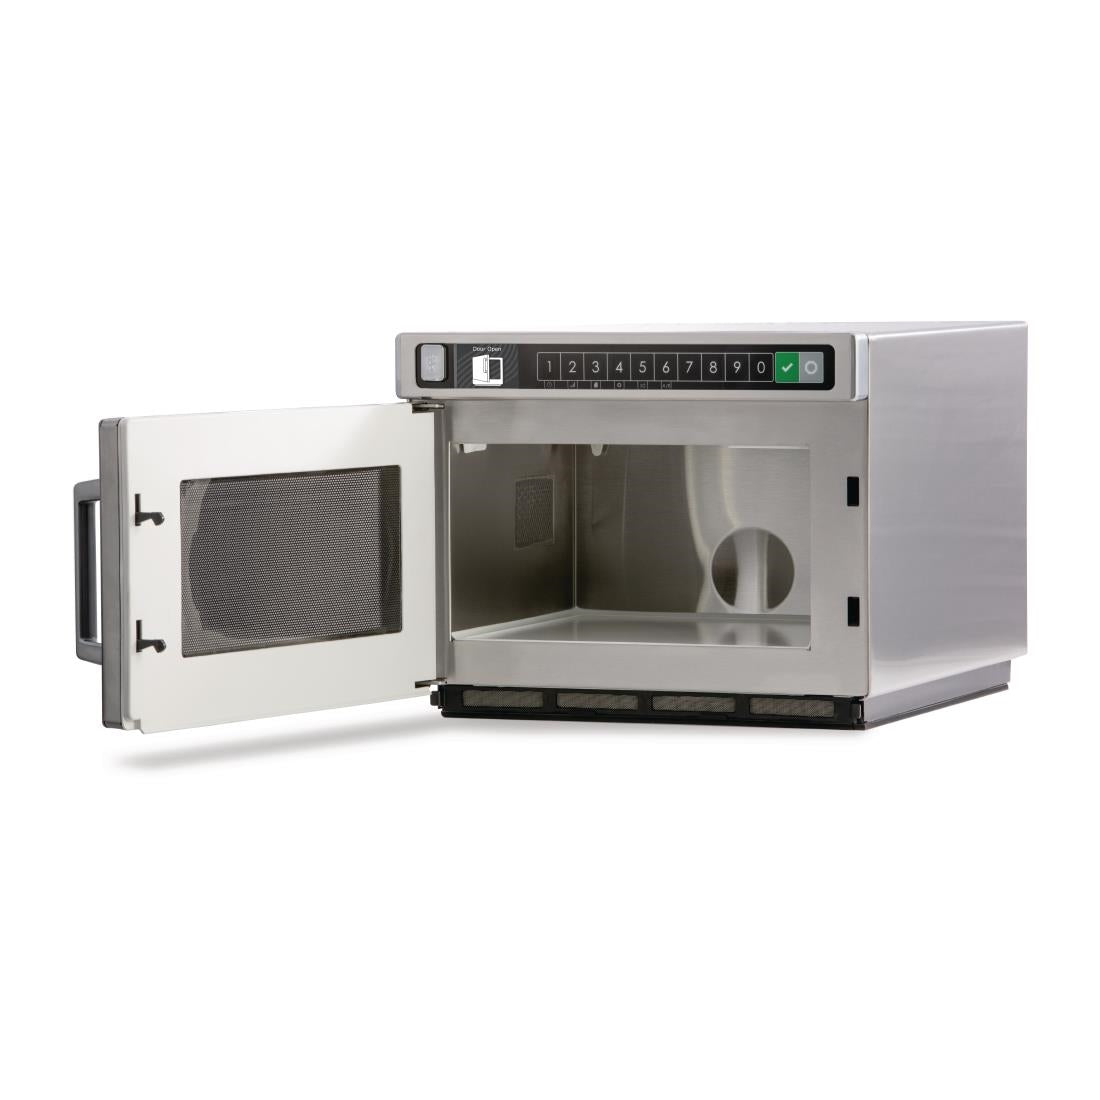 Menumaster Heavy Duty Compact Microwave DEC21E2 JD Catering Equipment Solutions Ltd